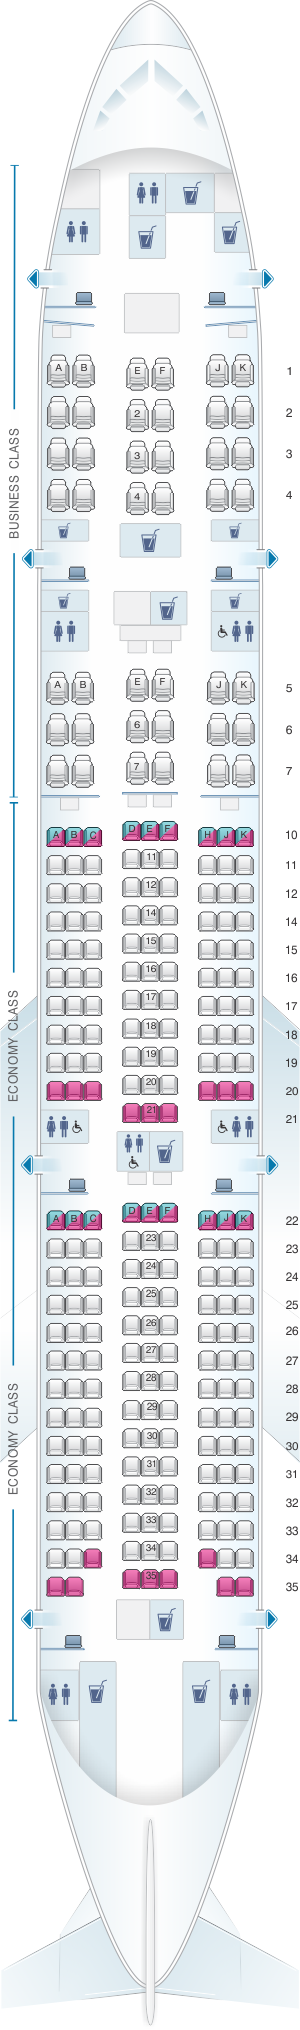 Mapa de asientos Qatar Airways Boeing B777 200LR 259pax - Plano del ...